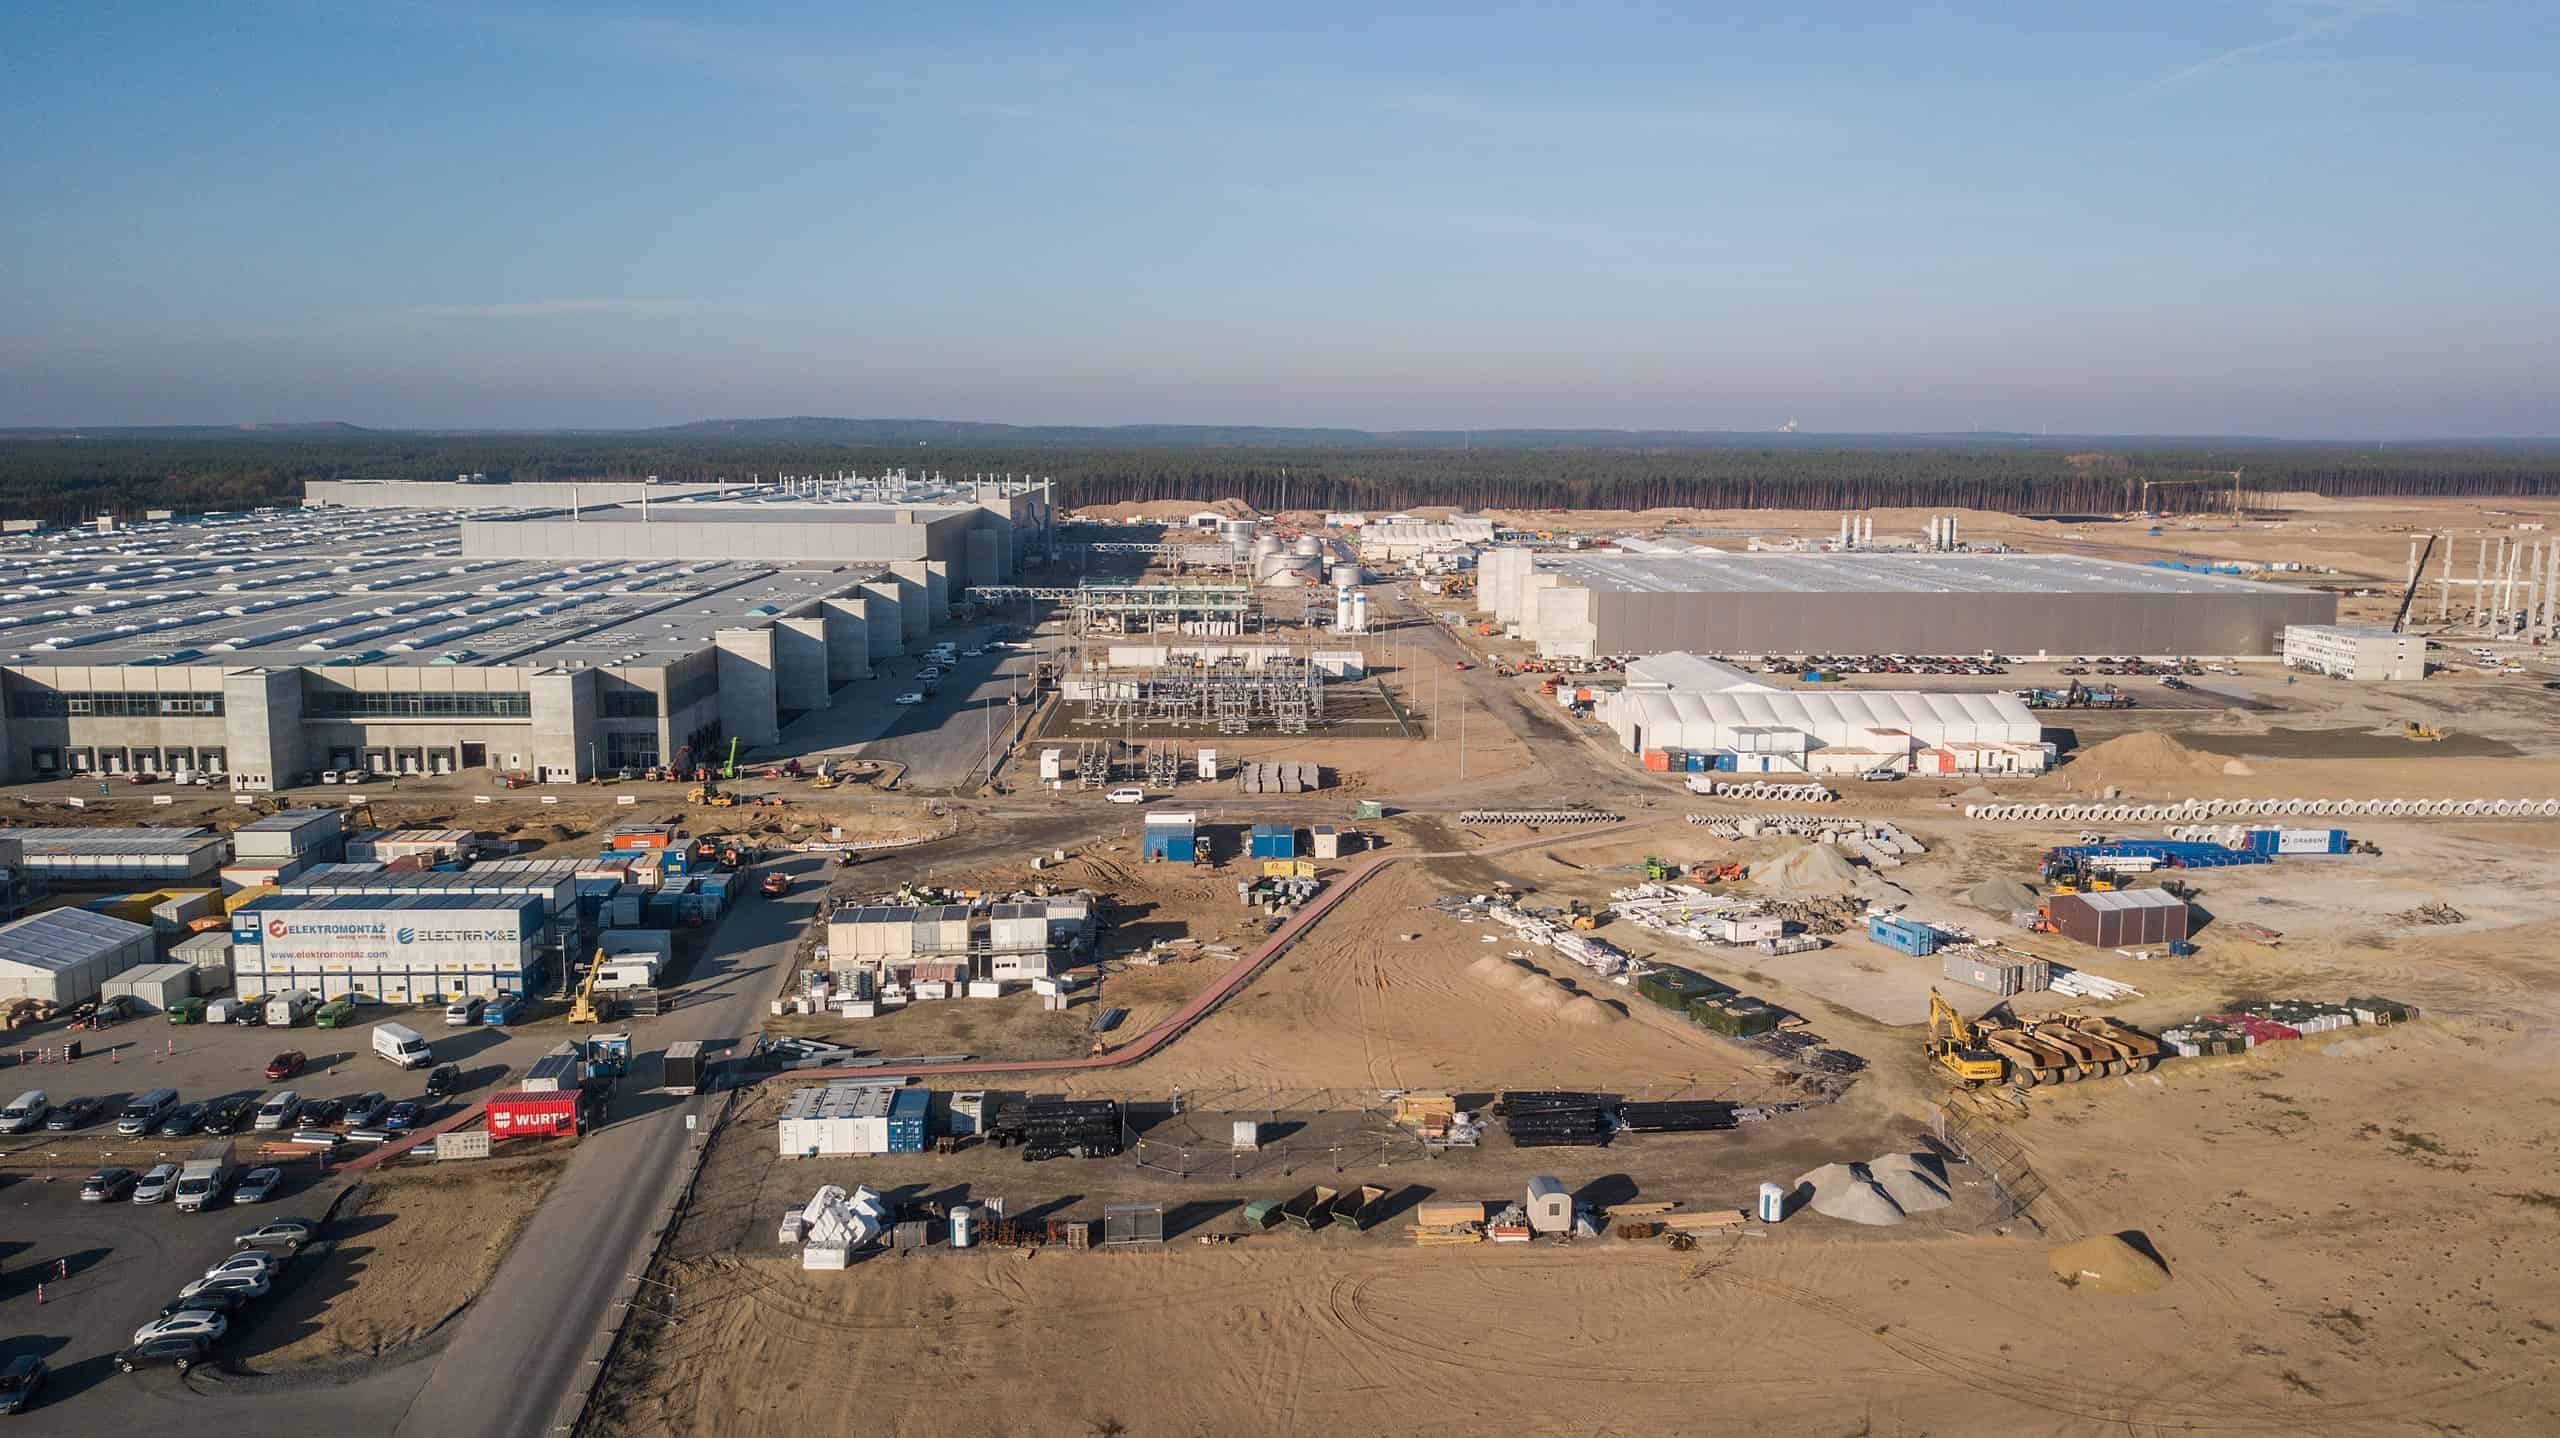 Tesla Gigafactory under construction in Germany